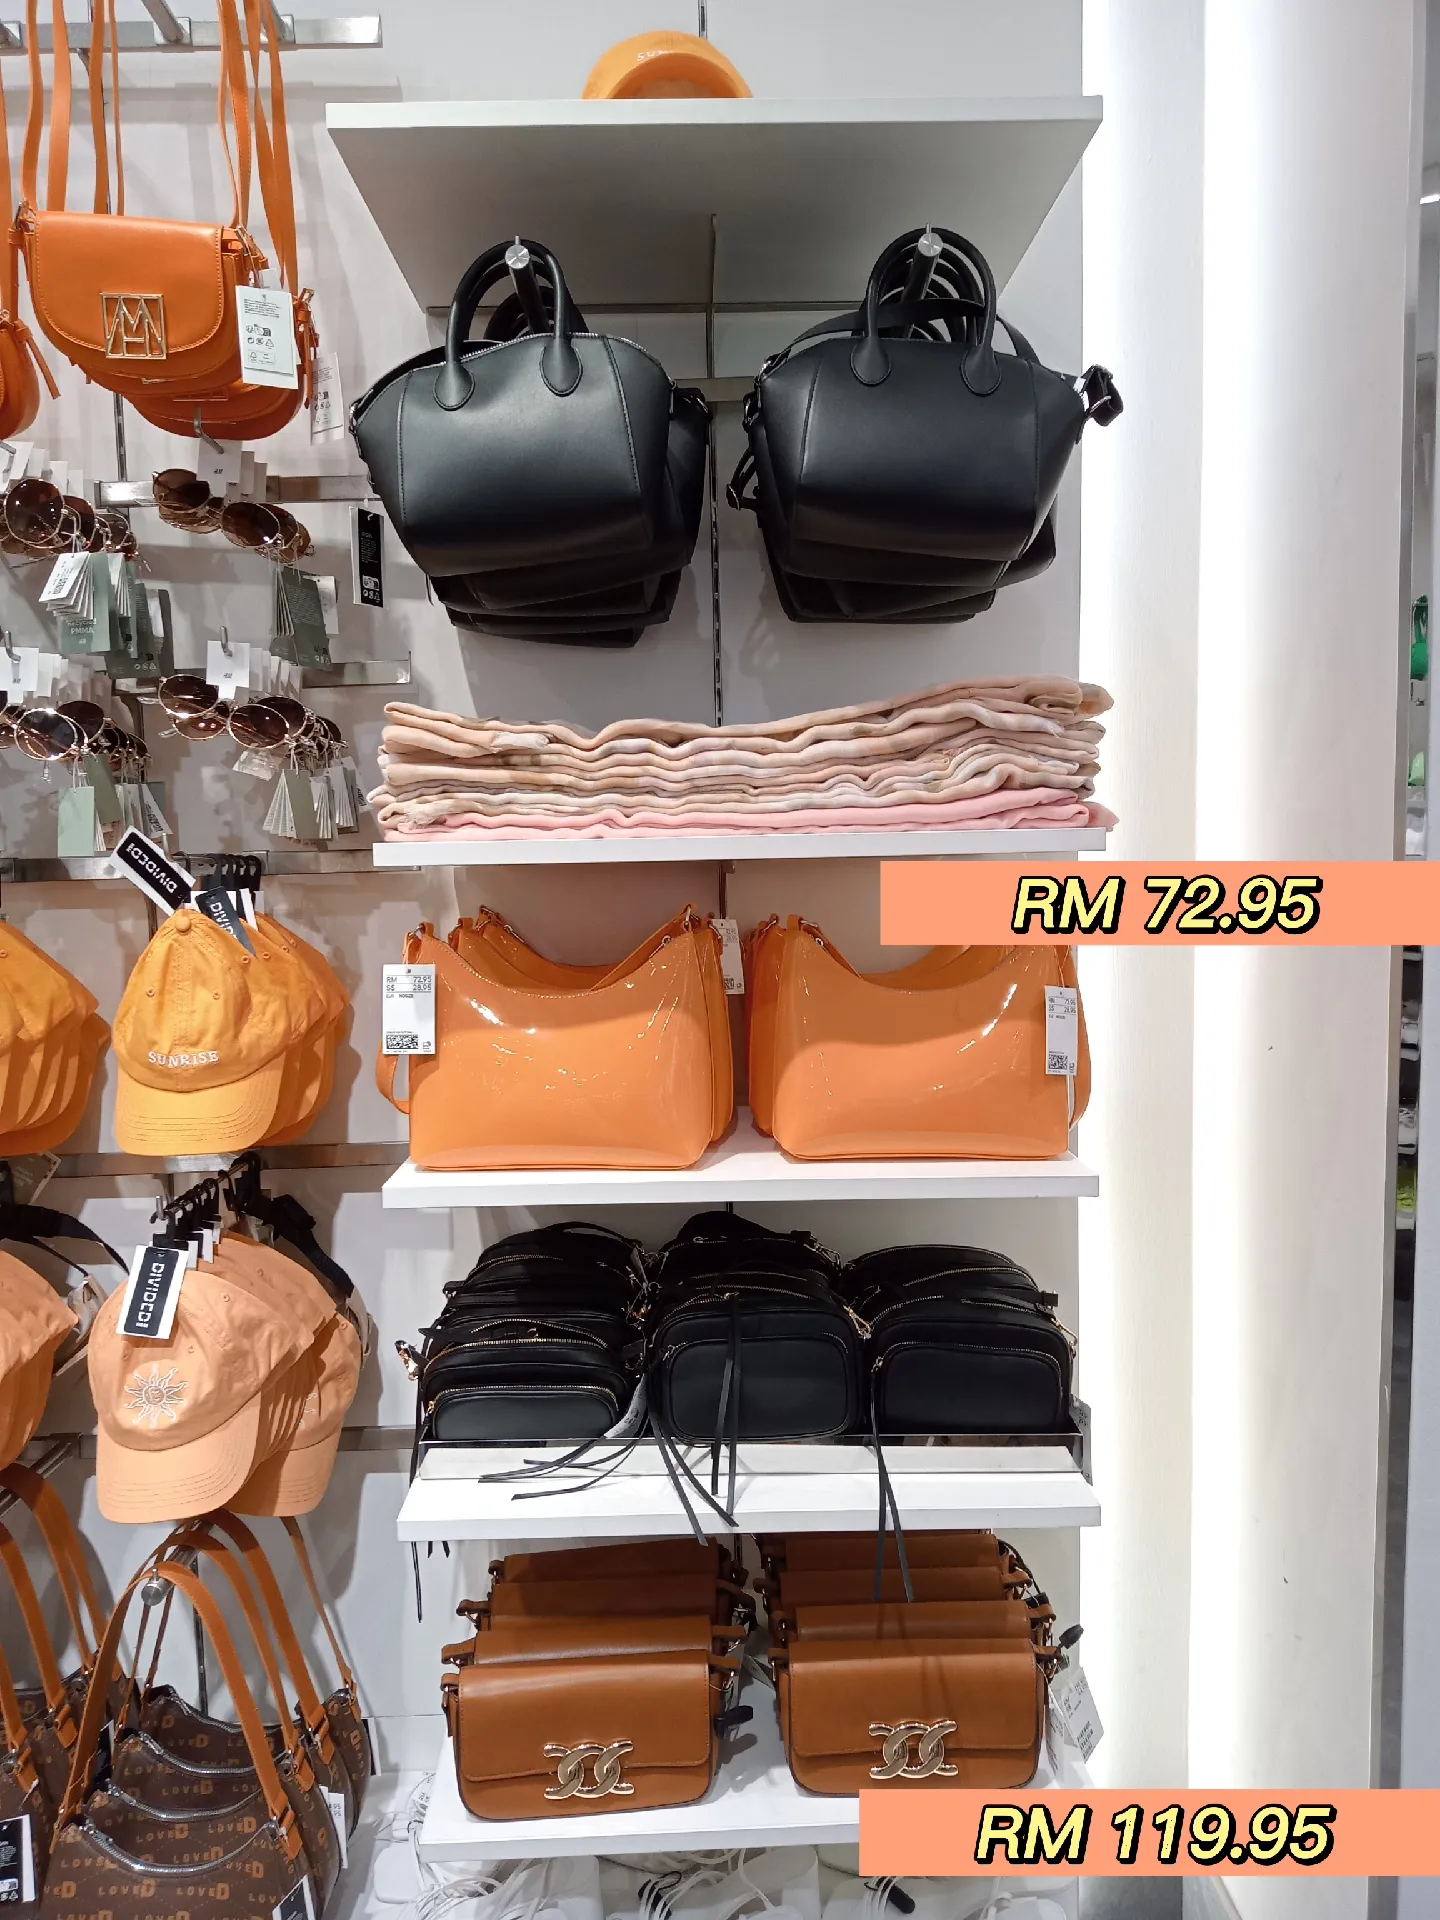 🇲🇾 H&M Lady Handbags, Gallery posted by Venus Yap